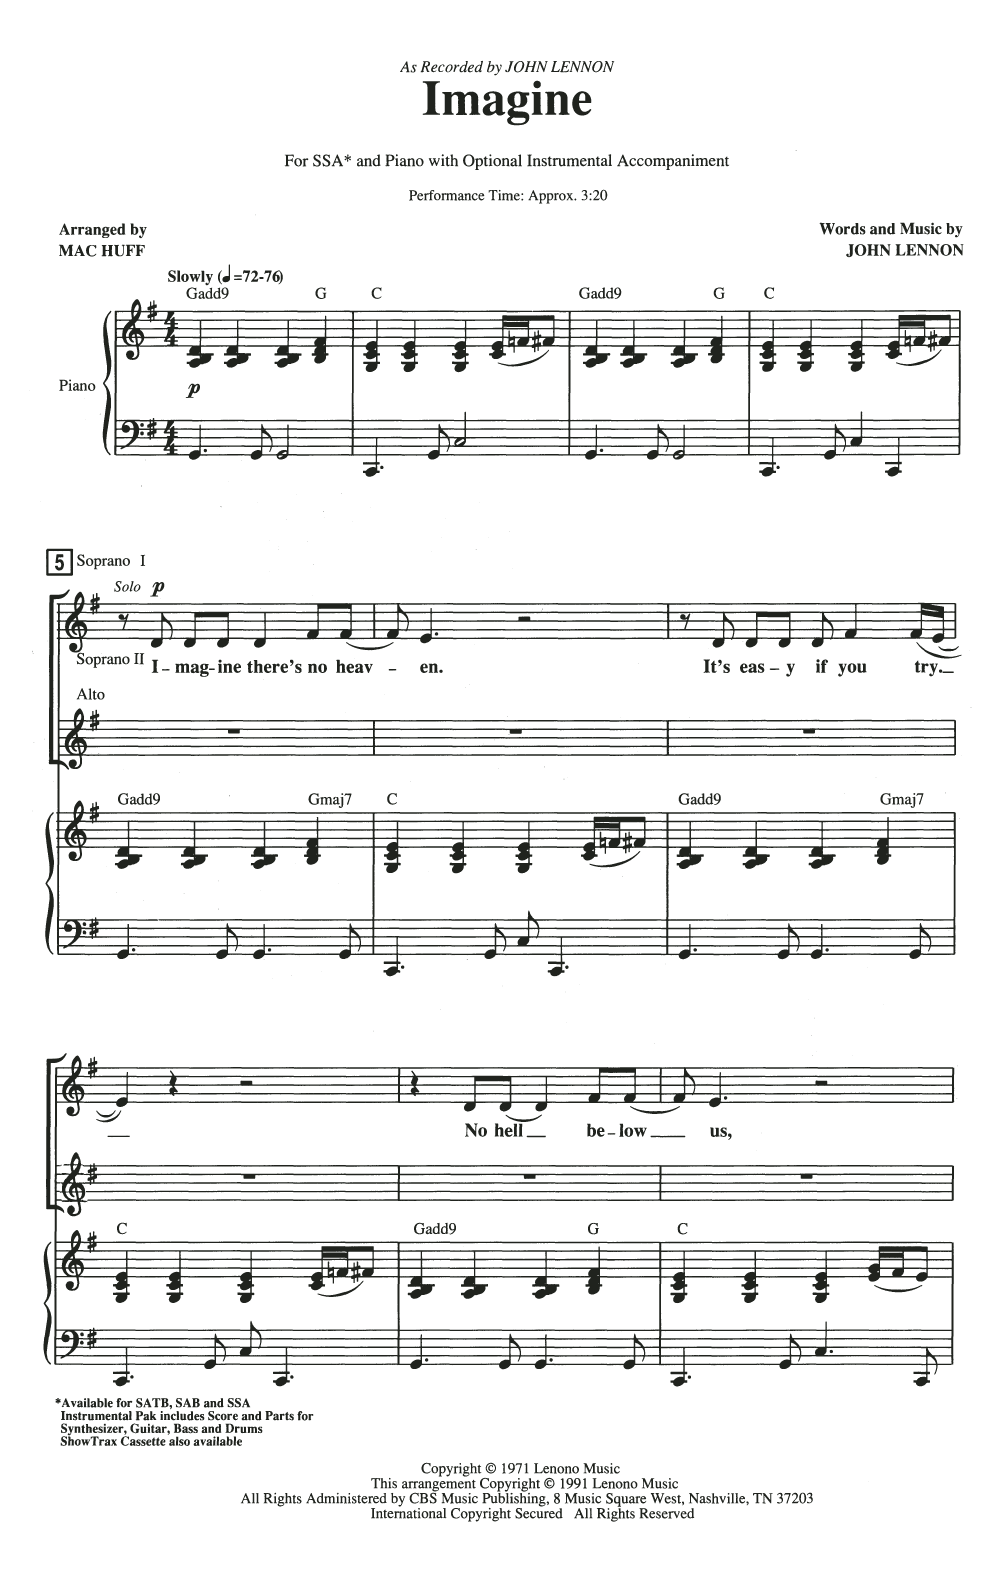 John Lennon Imagine (arr. Mac Huff) Sheet Music Notes & Chords for SATB - Download or Print PDF